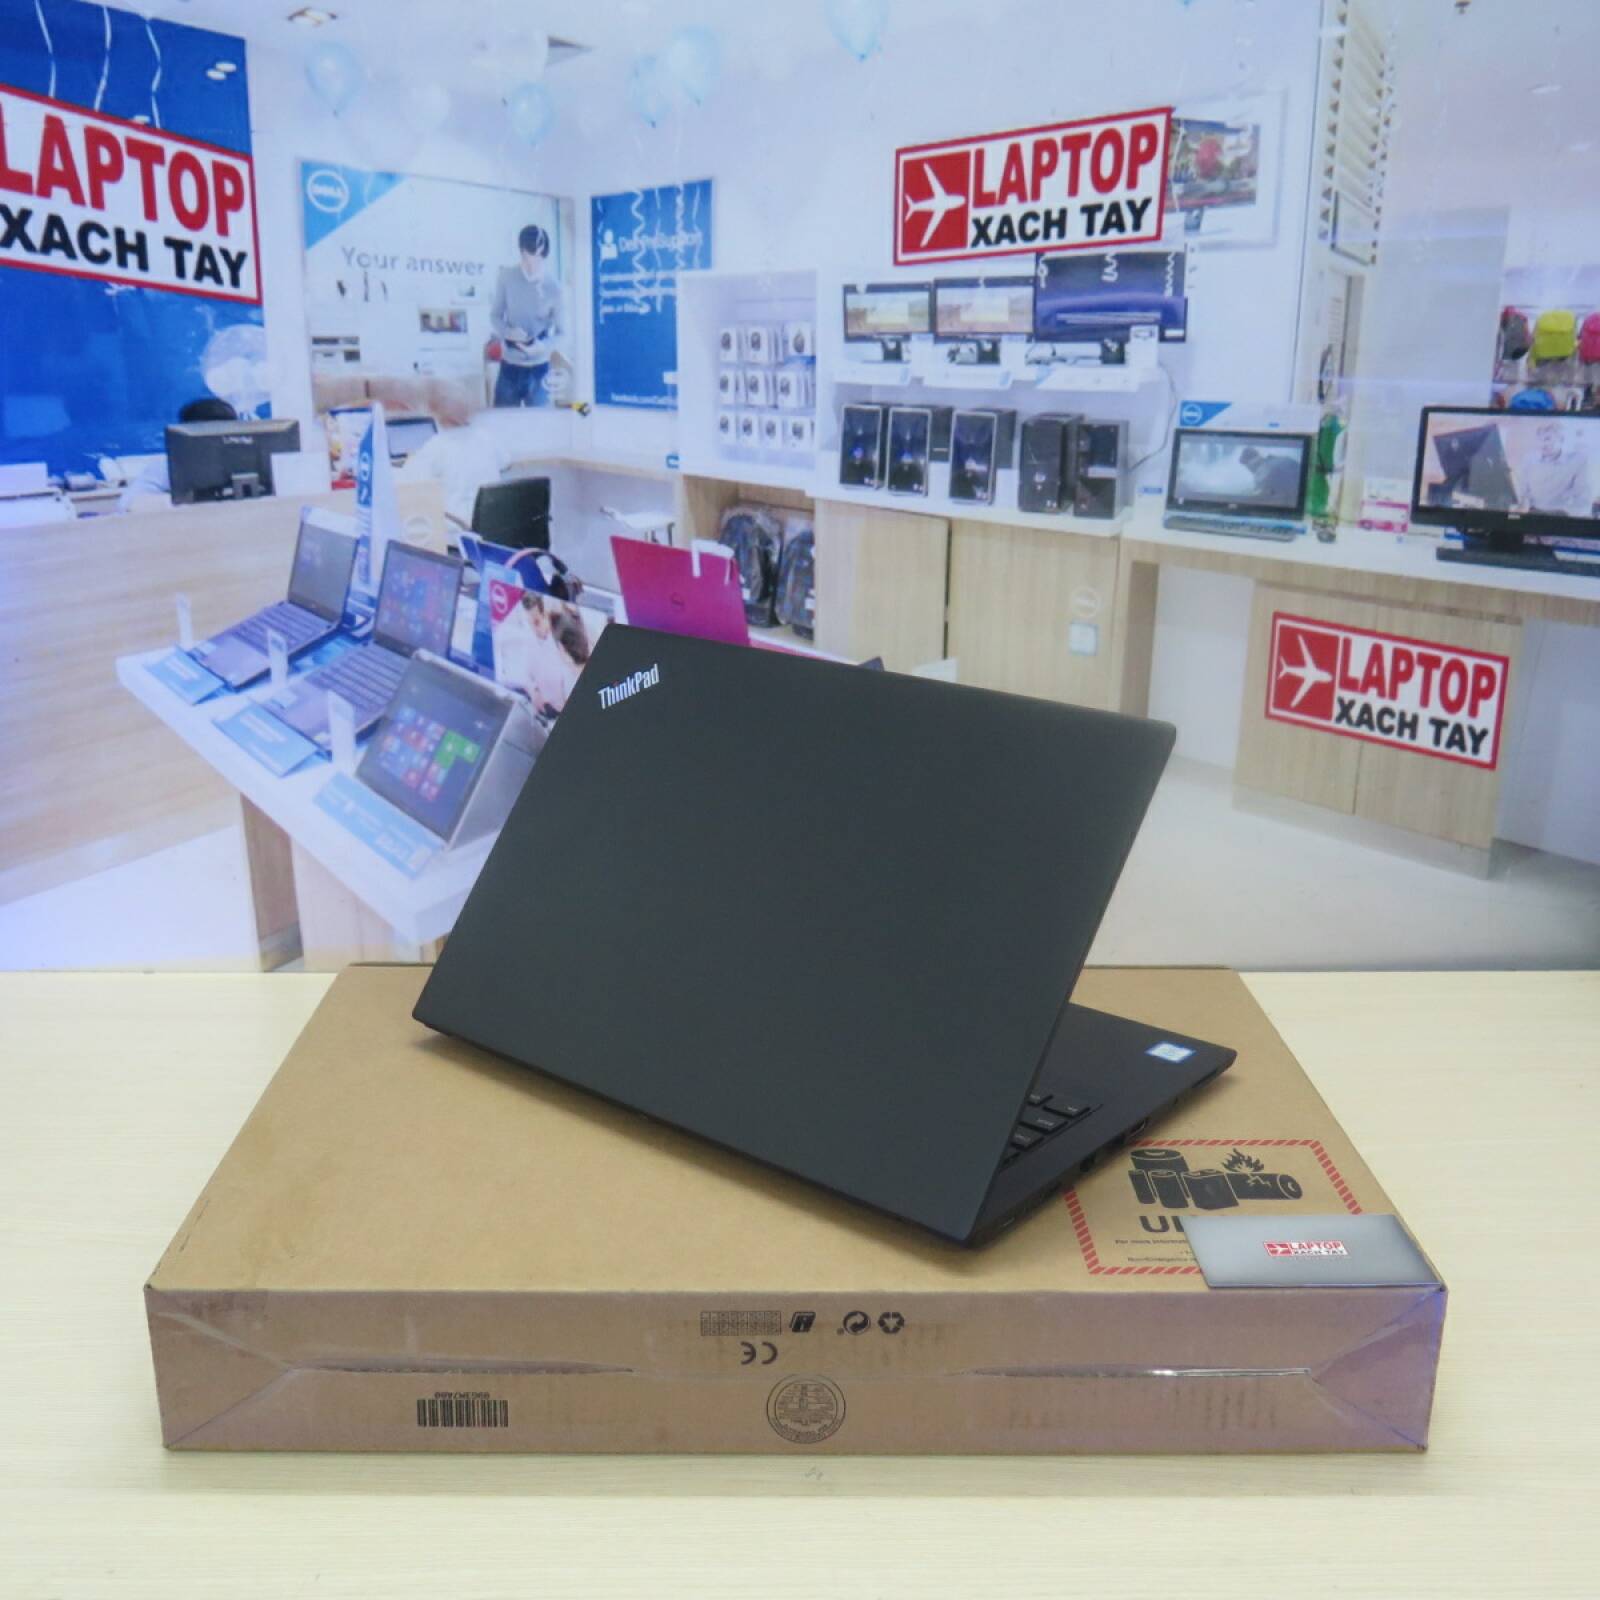 Lenovo Thinkpad T480S tại Laptopxachtayshop.com